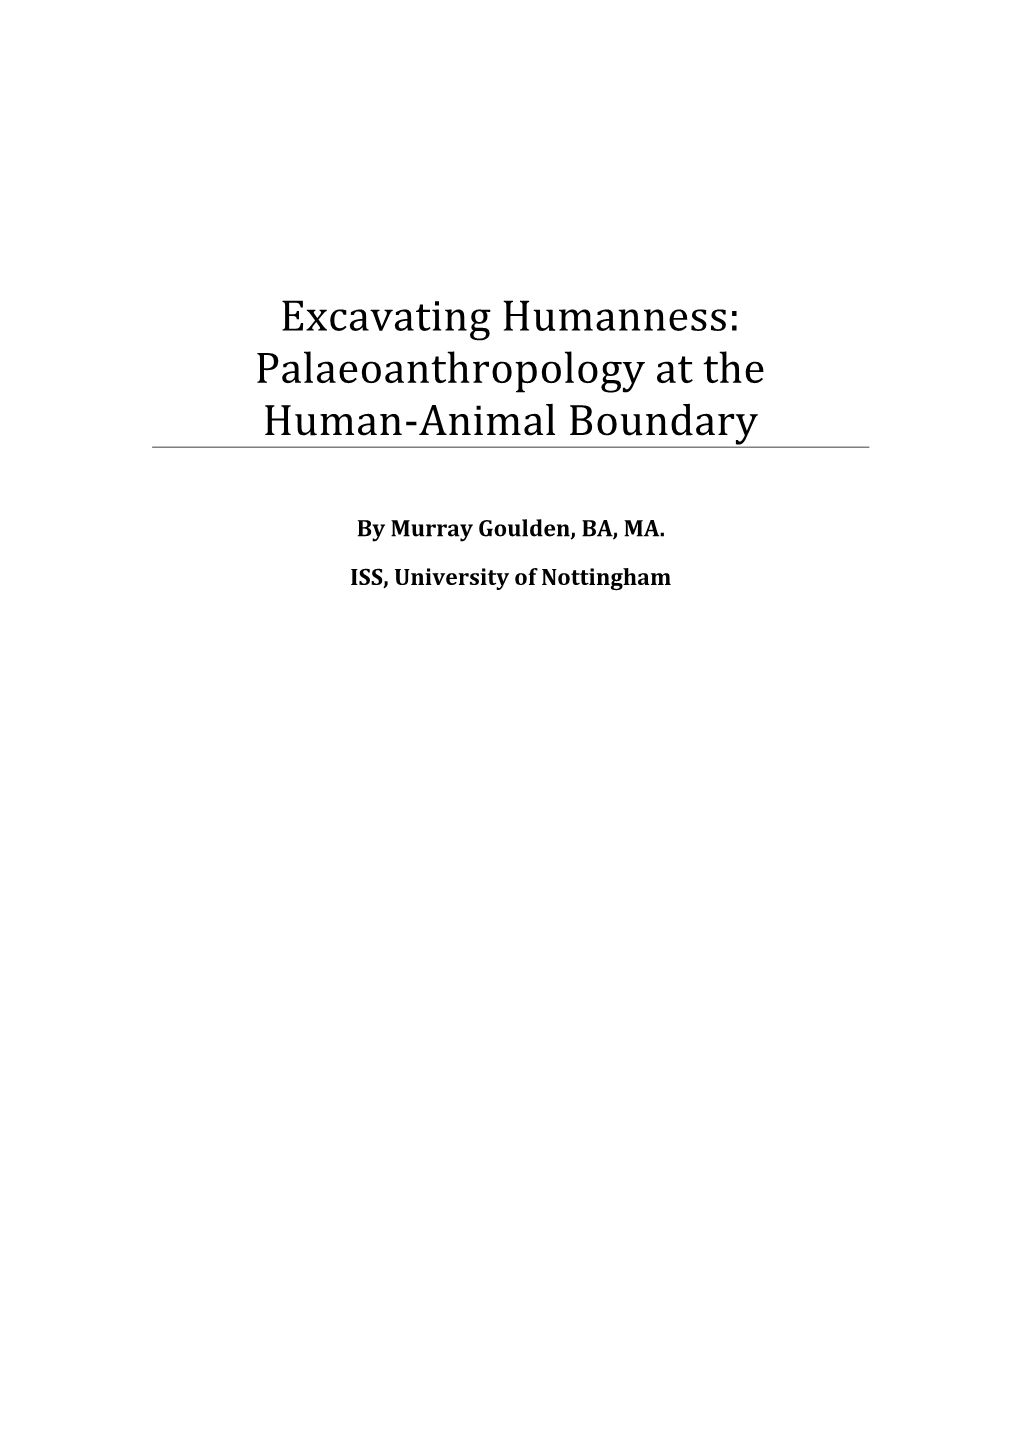 Palaeoanthropology at the Human-Animal Boundary